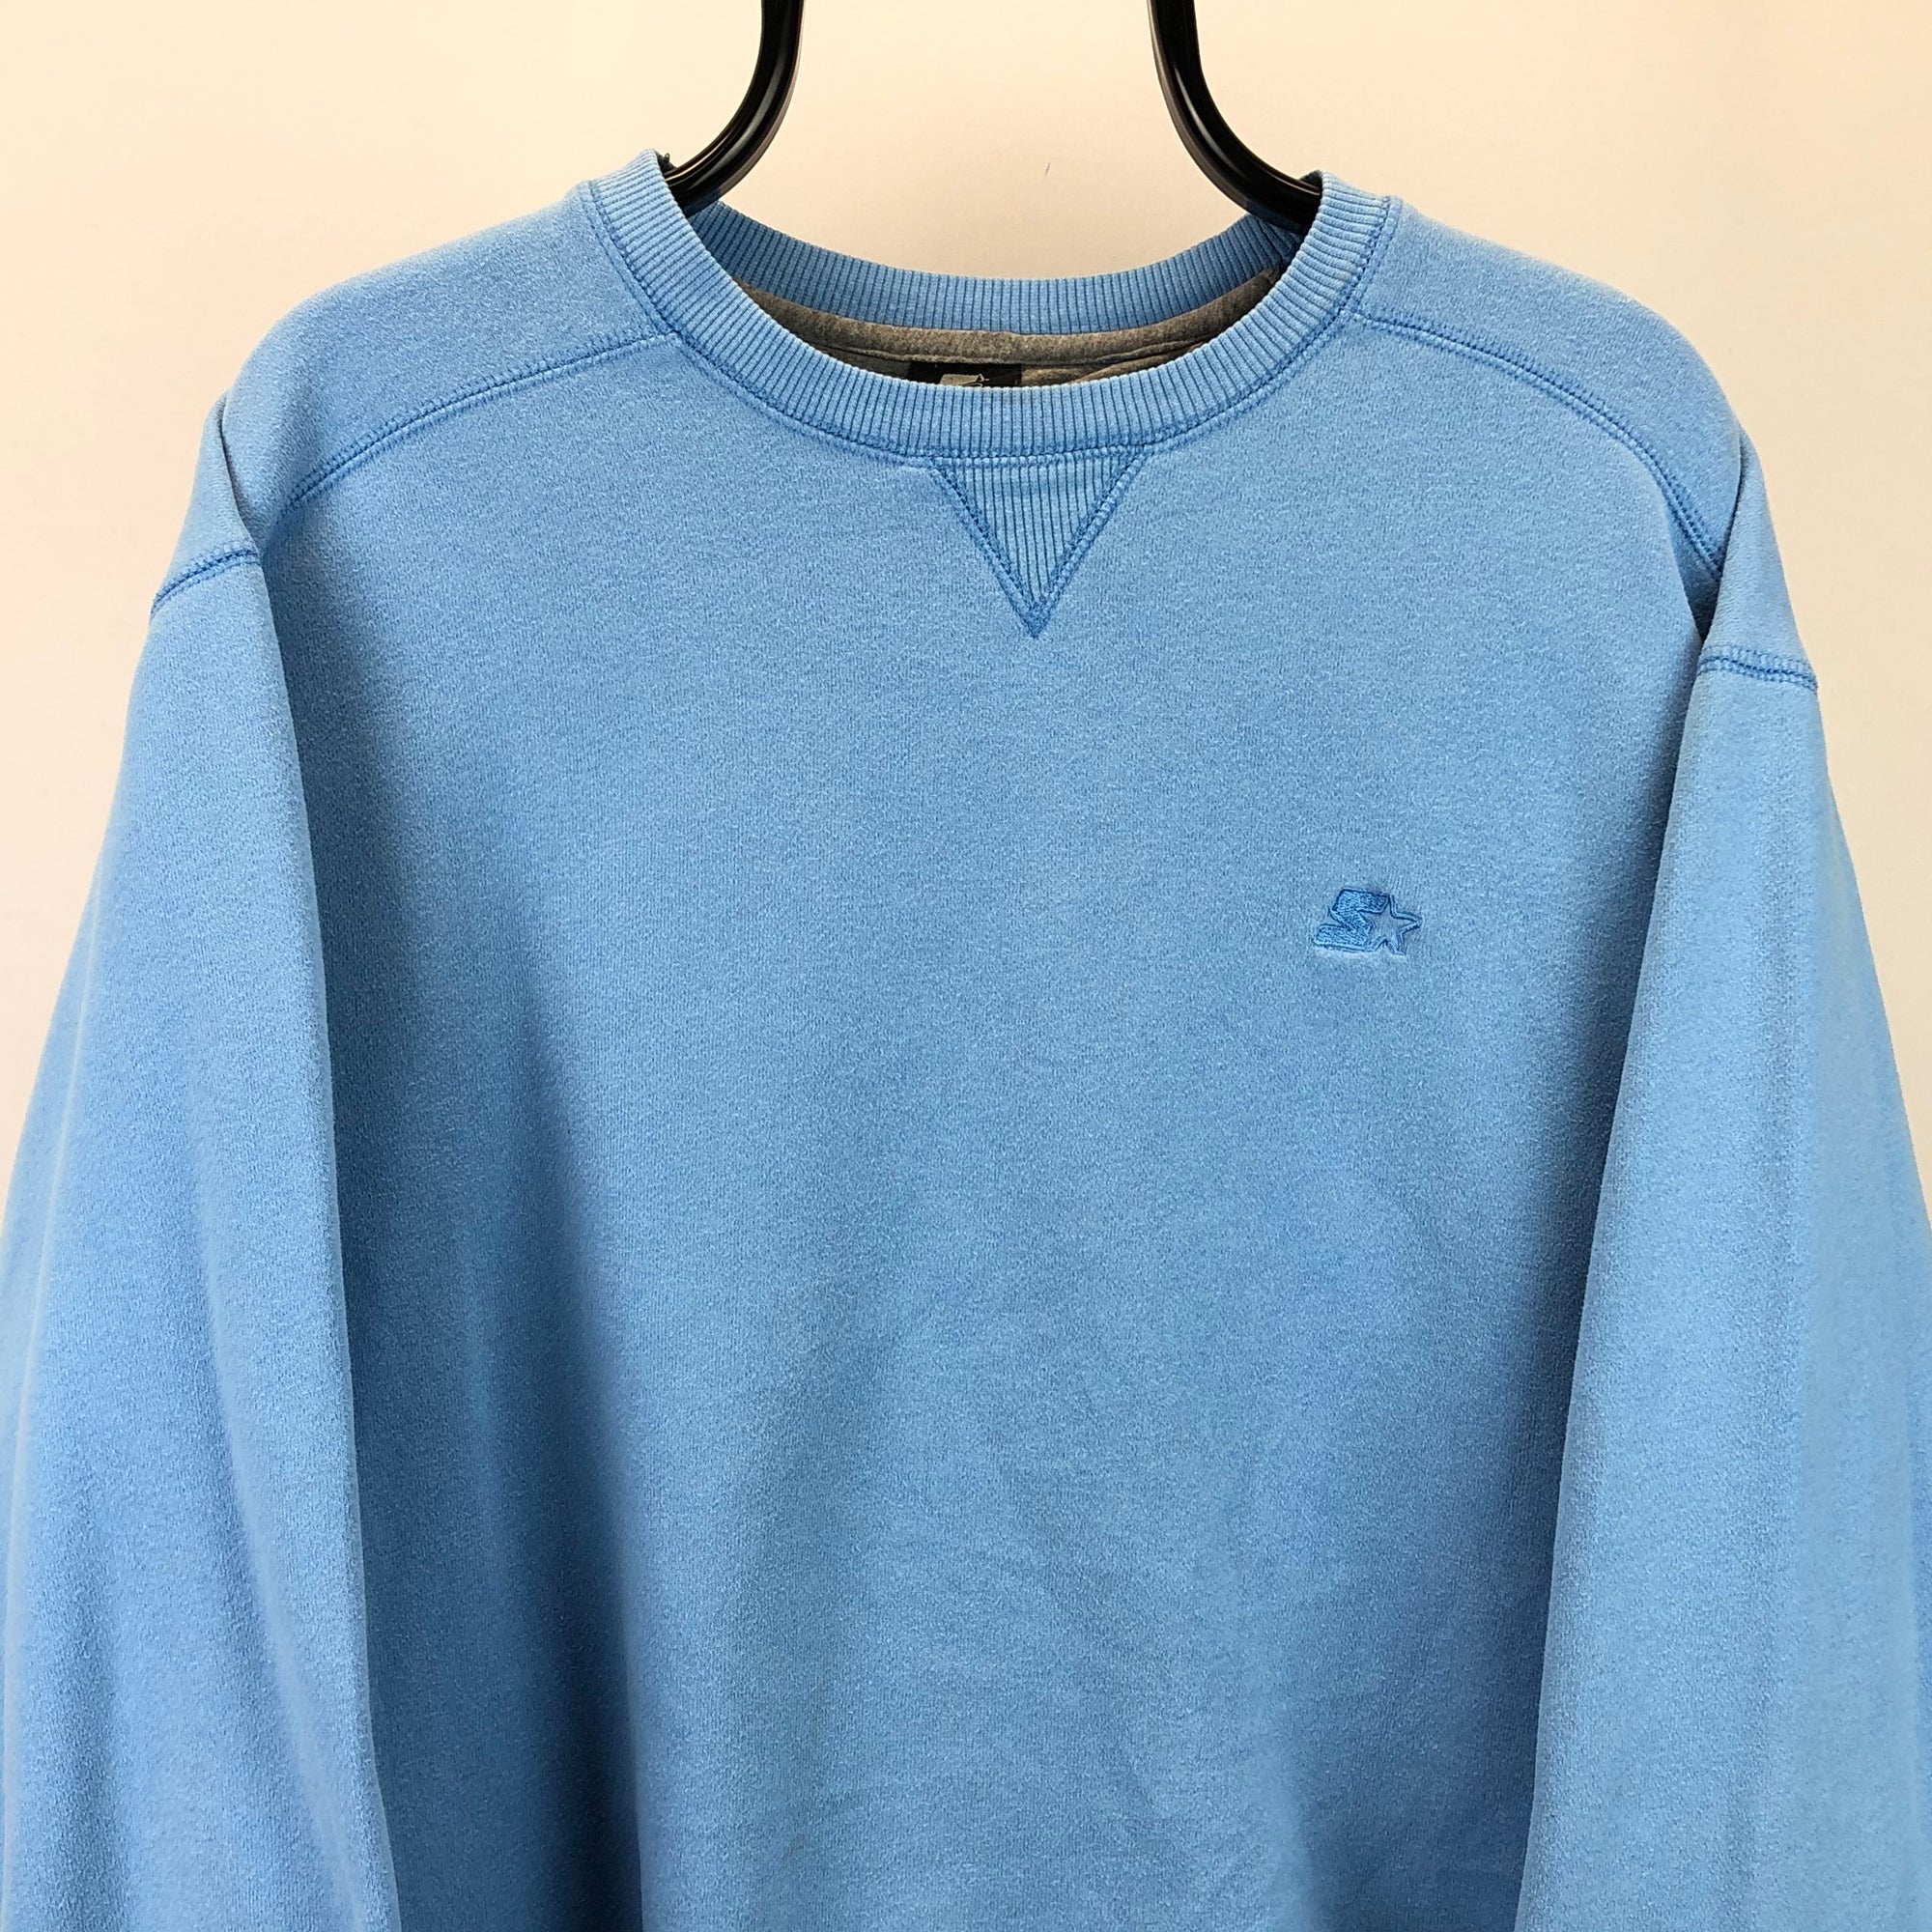 Vintage Starter Sweatshirt in Baby Blue - Men's Medium/Women's Large